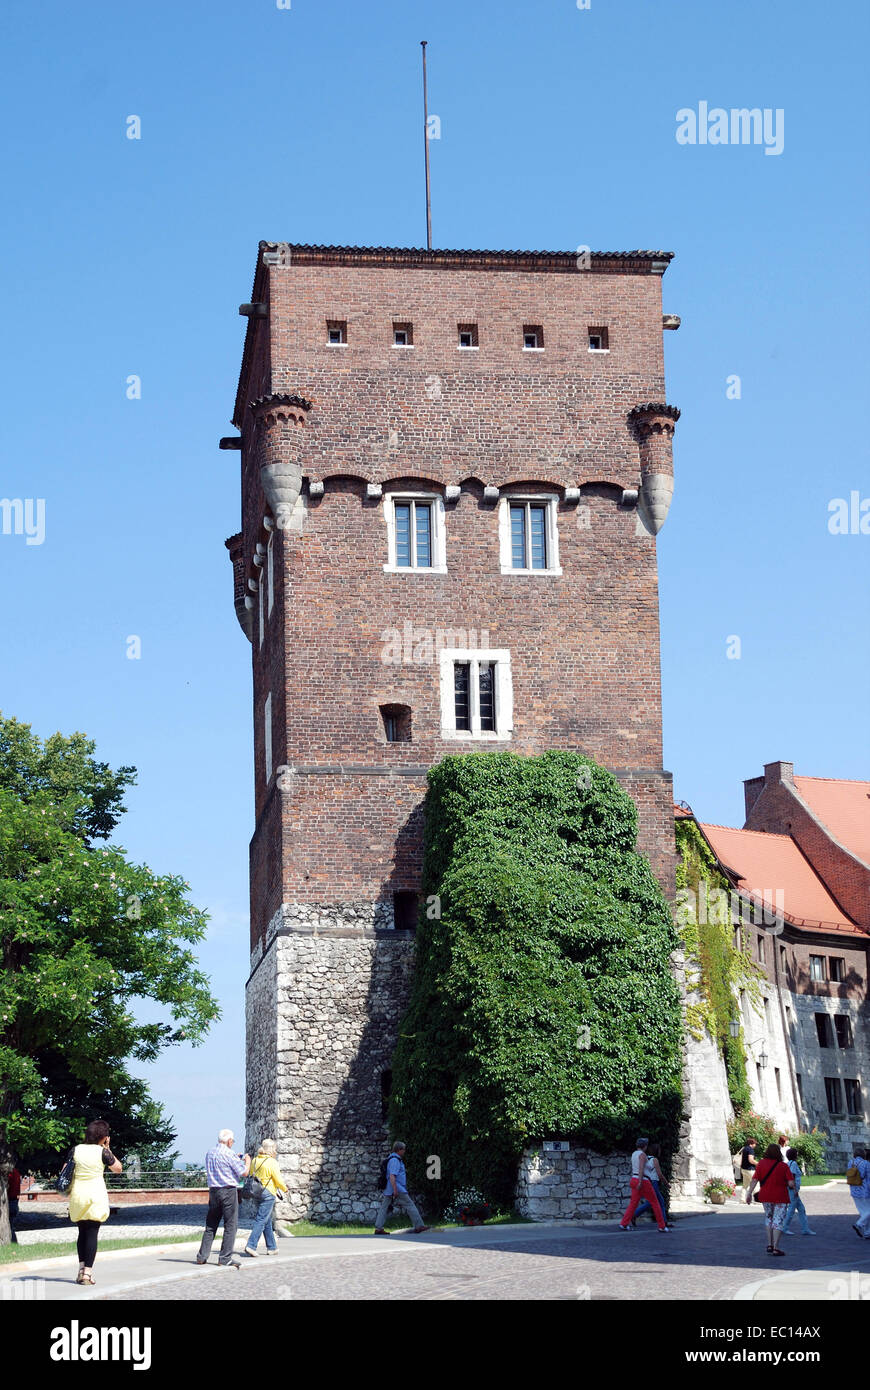 Wachturm am Wawel Hügel von Krakau in Polen. Stockfoto